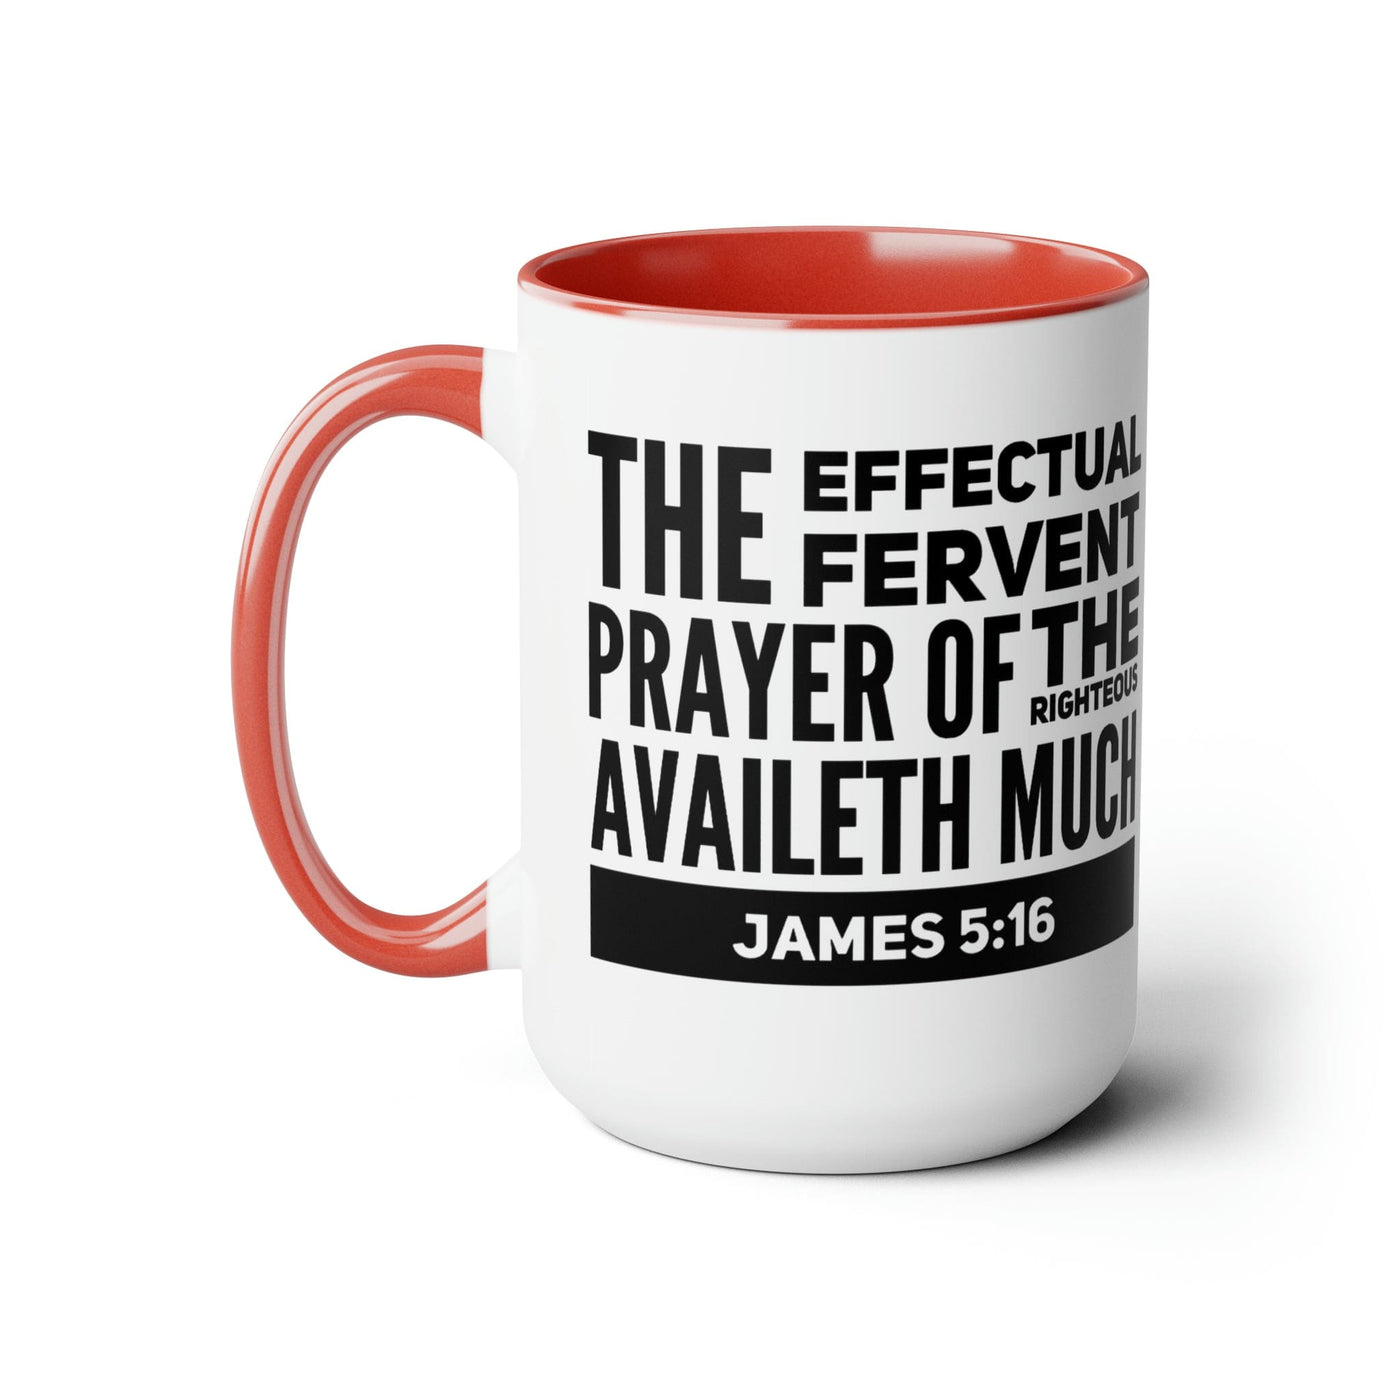 Accent Ceramic Coffee Mug 15oz - The Effectual Fervent Prayer Black